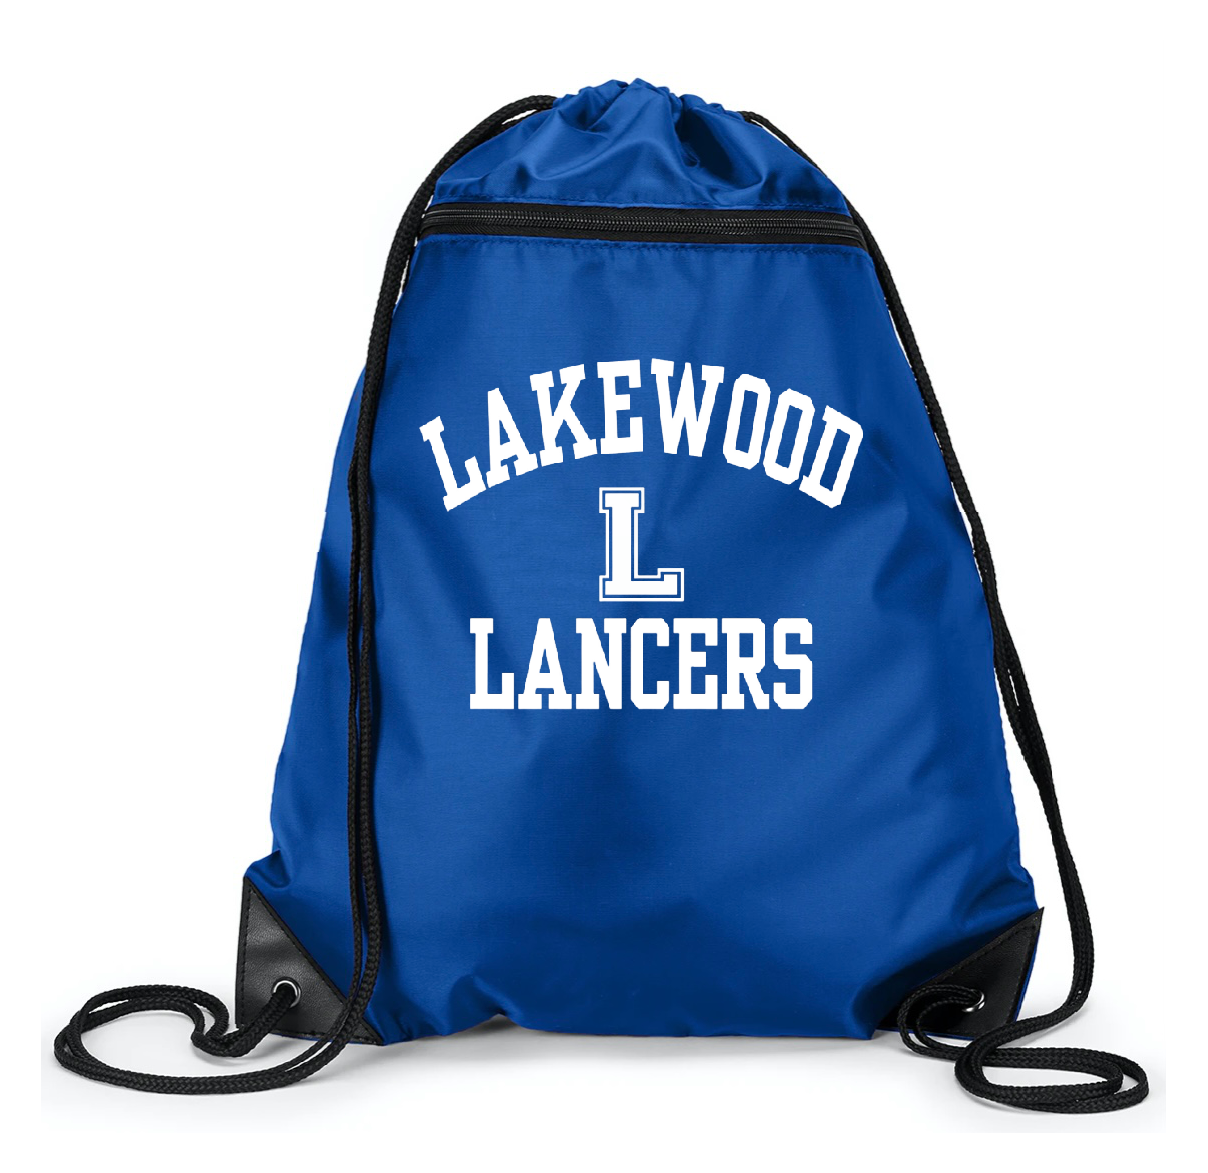 Lakewood Lancers Drawstring Bag with Zipper Pocket - LMS baseball